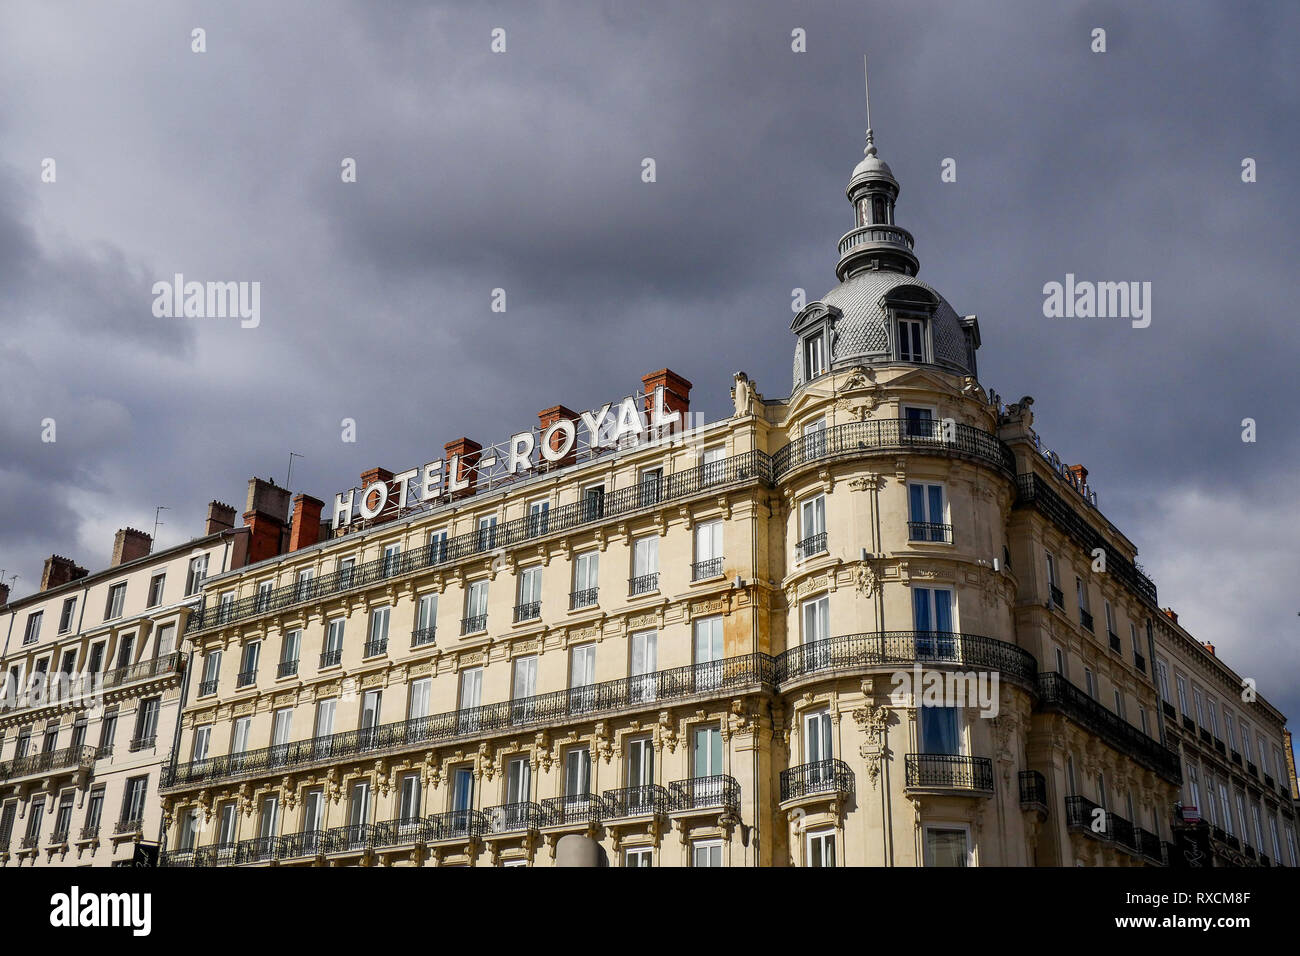 Hotel Royal, Lyon, France Stock Photo